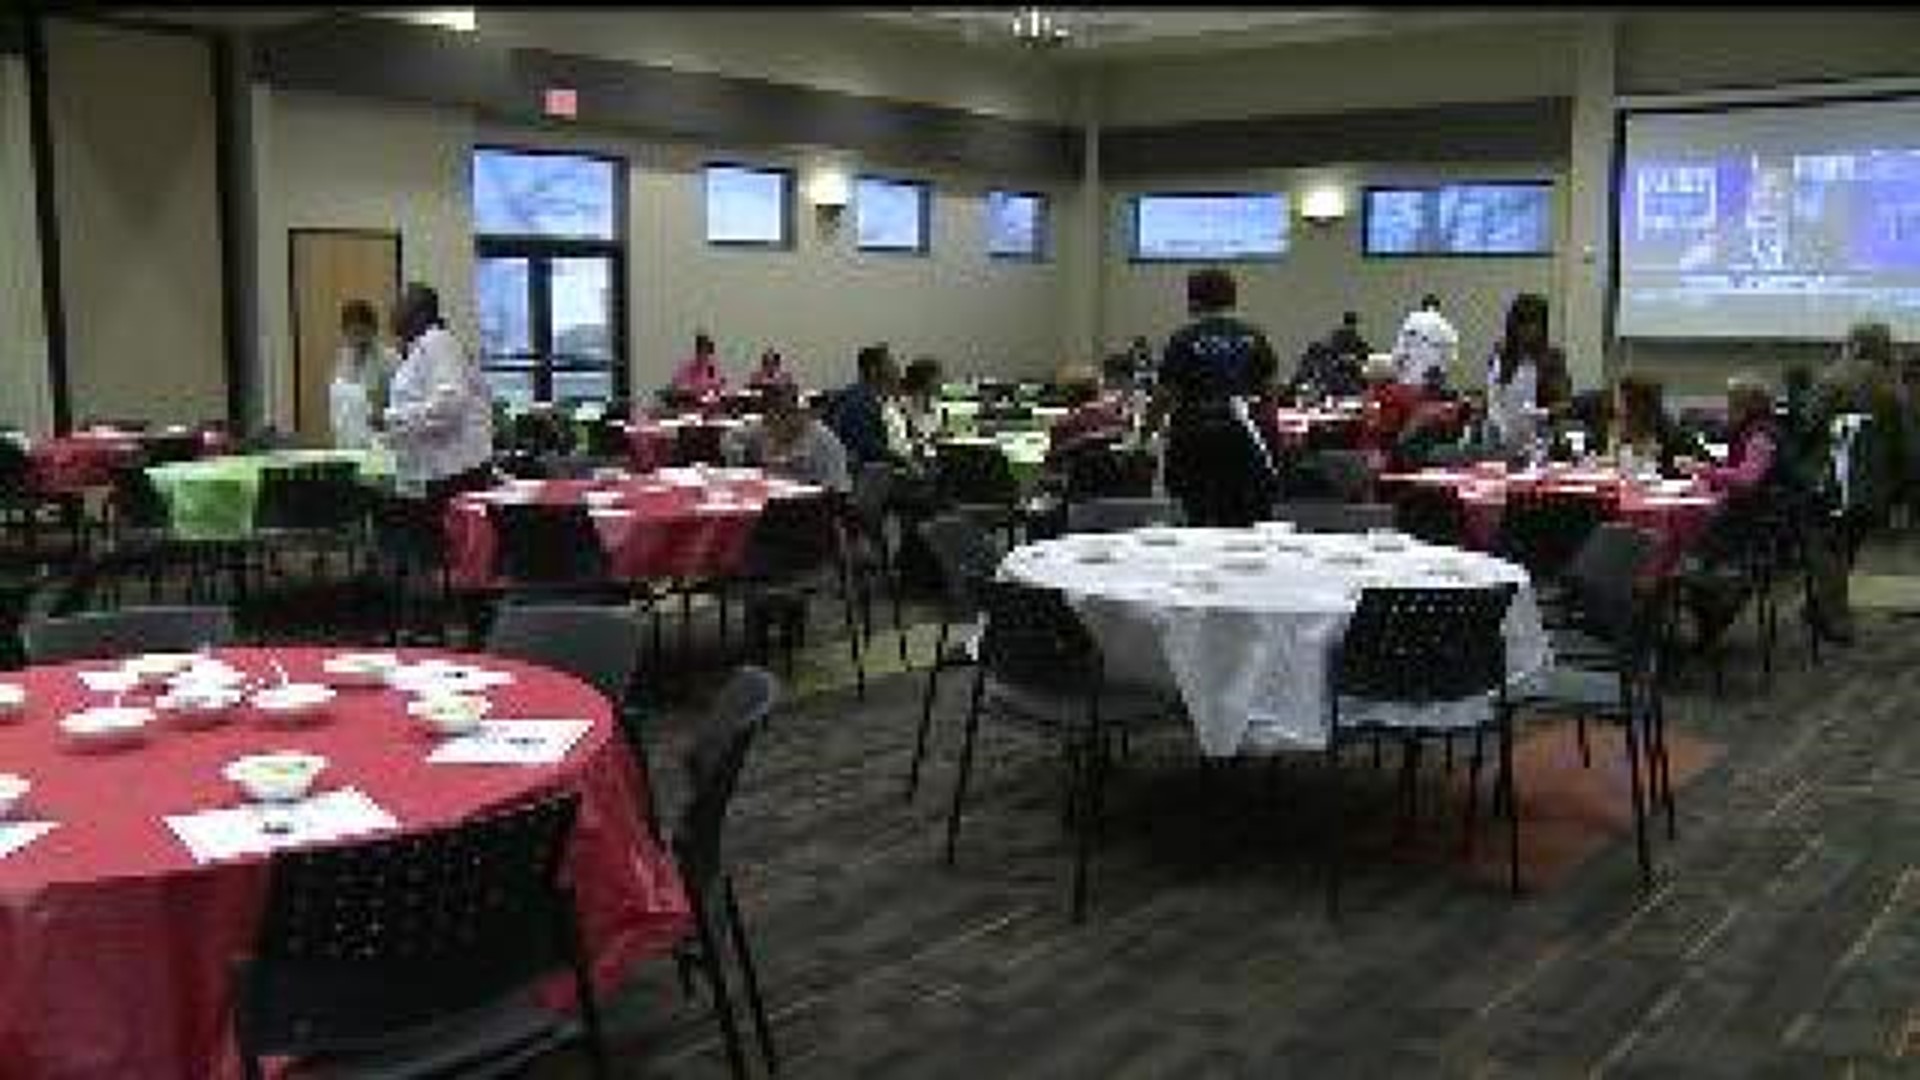 Community meal held in Rock Island